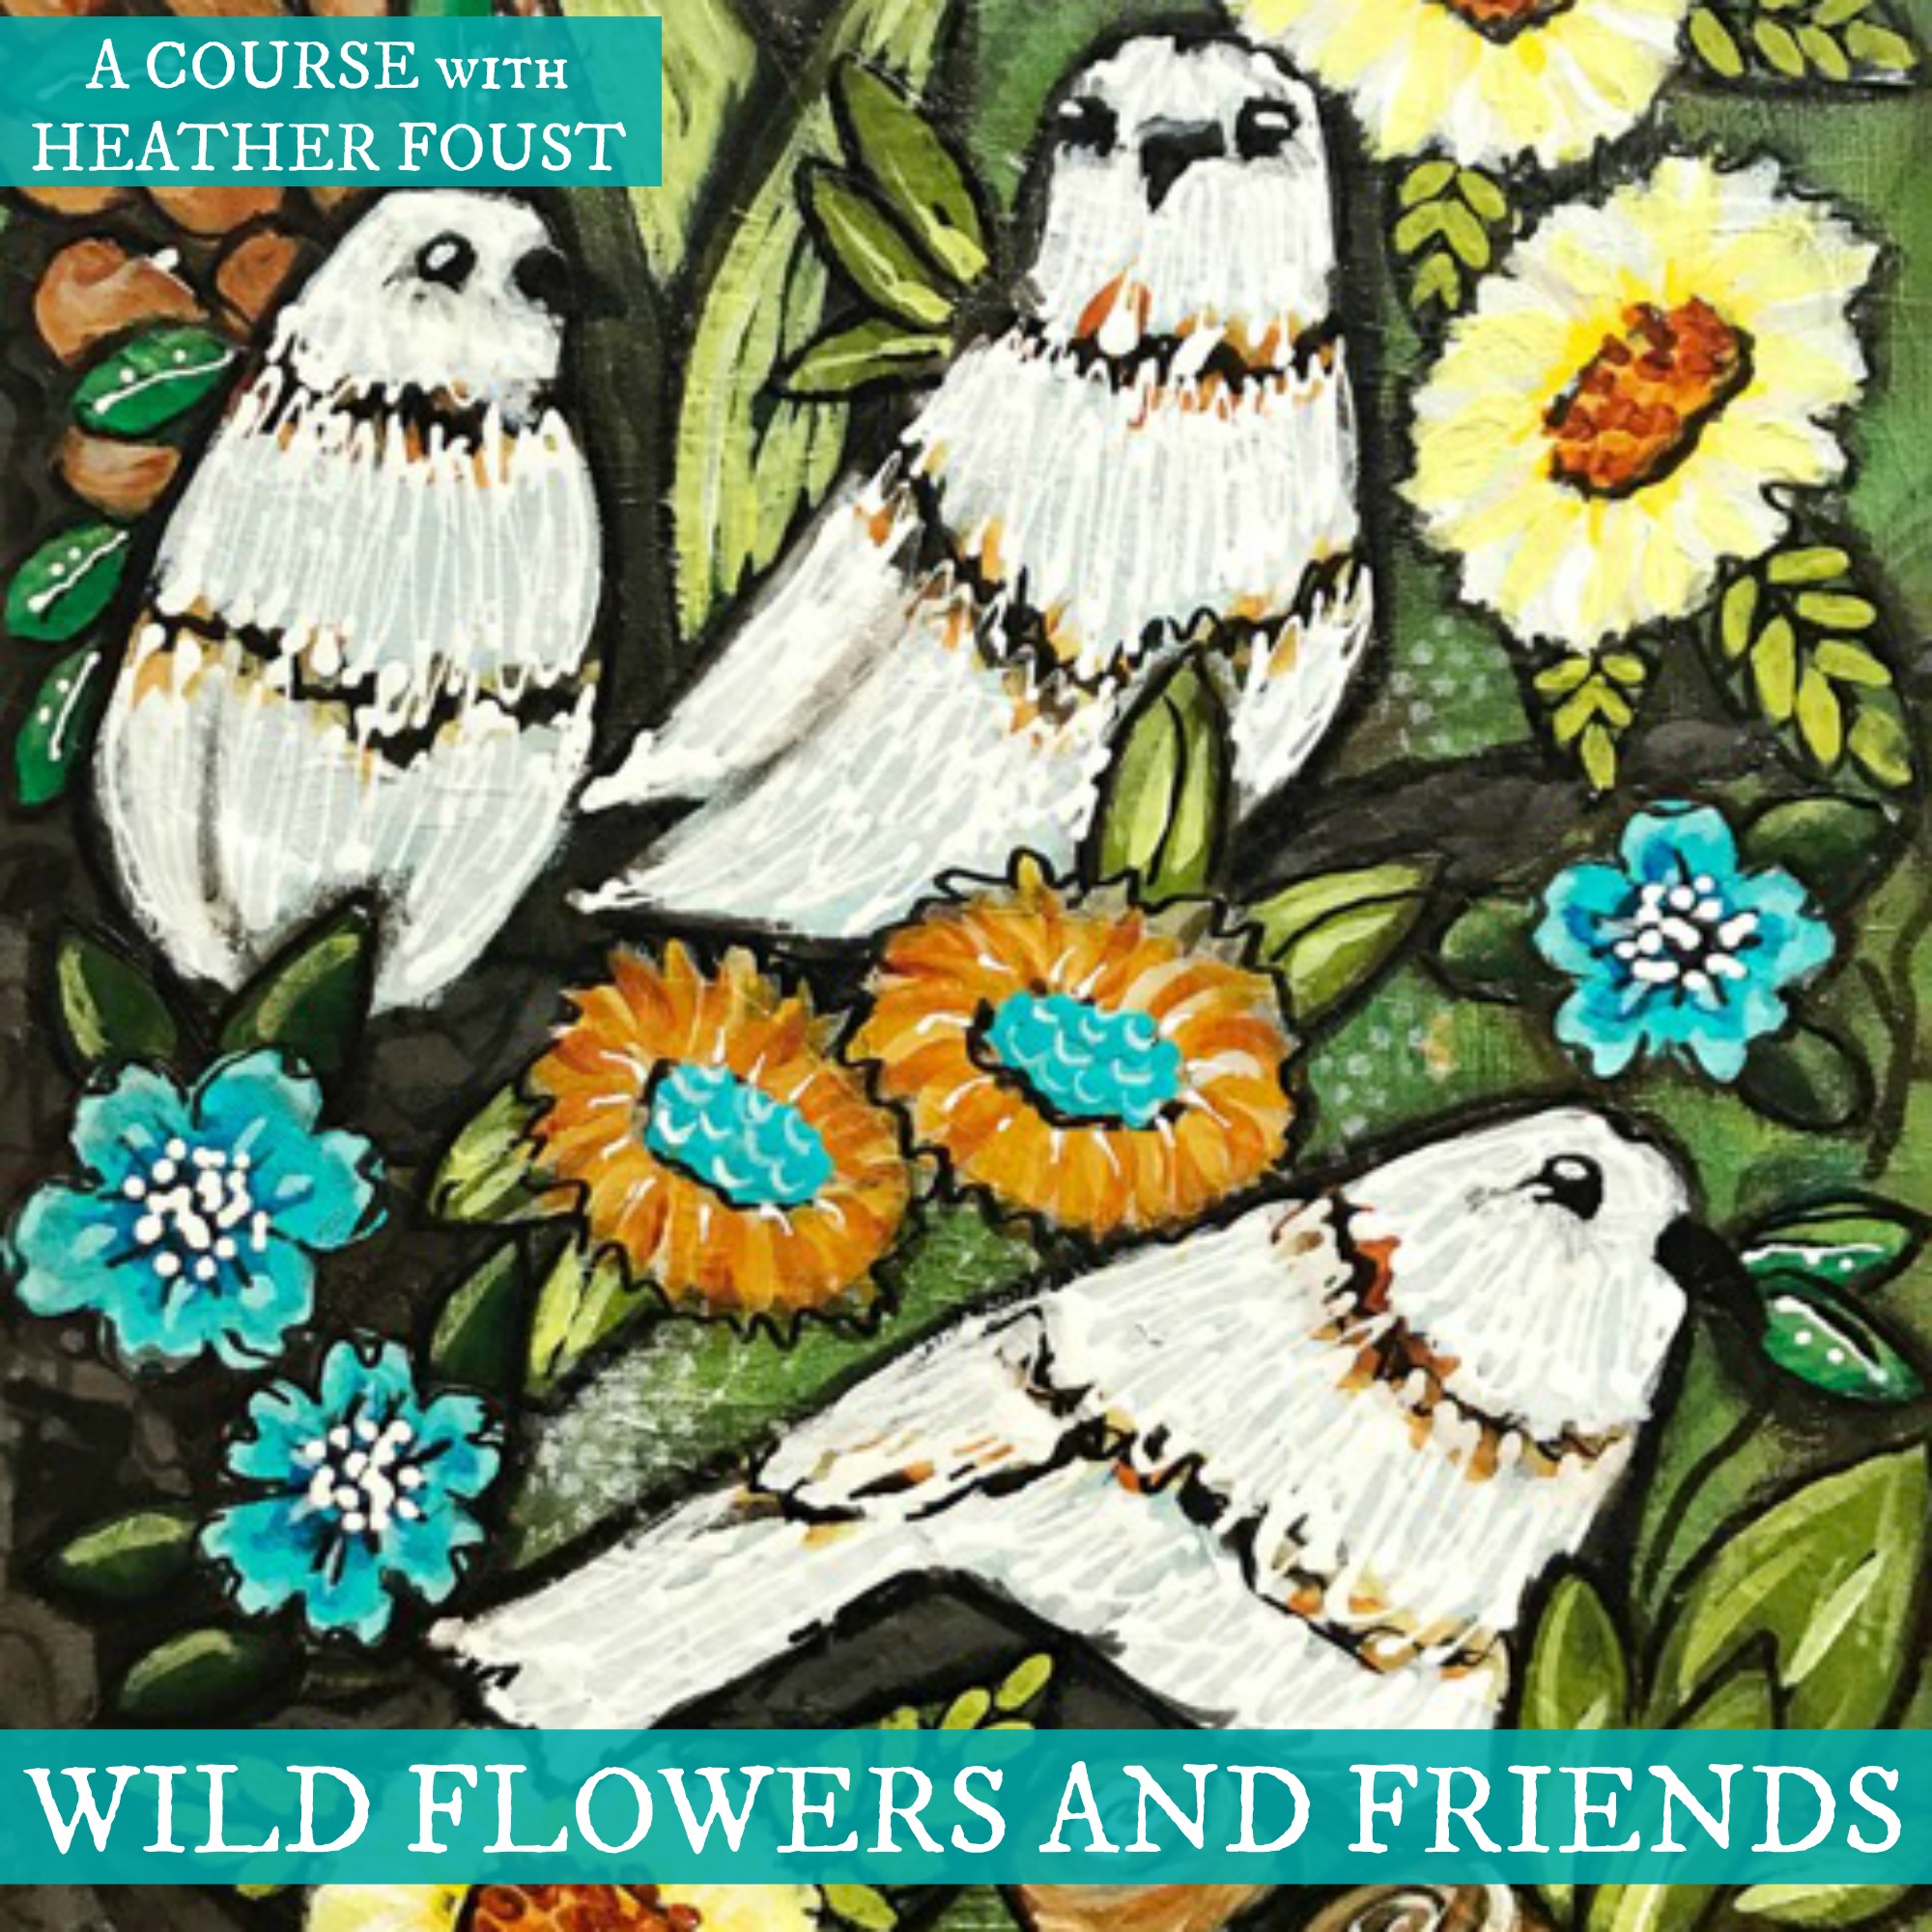 WILD FLOWERS AND FRIENDS - Kara Bullock Art